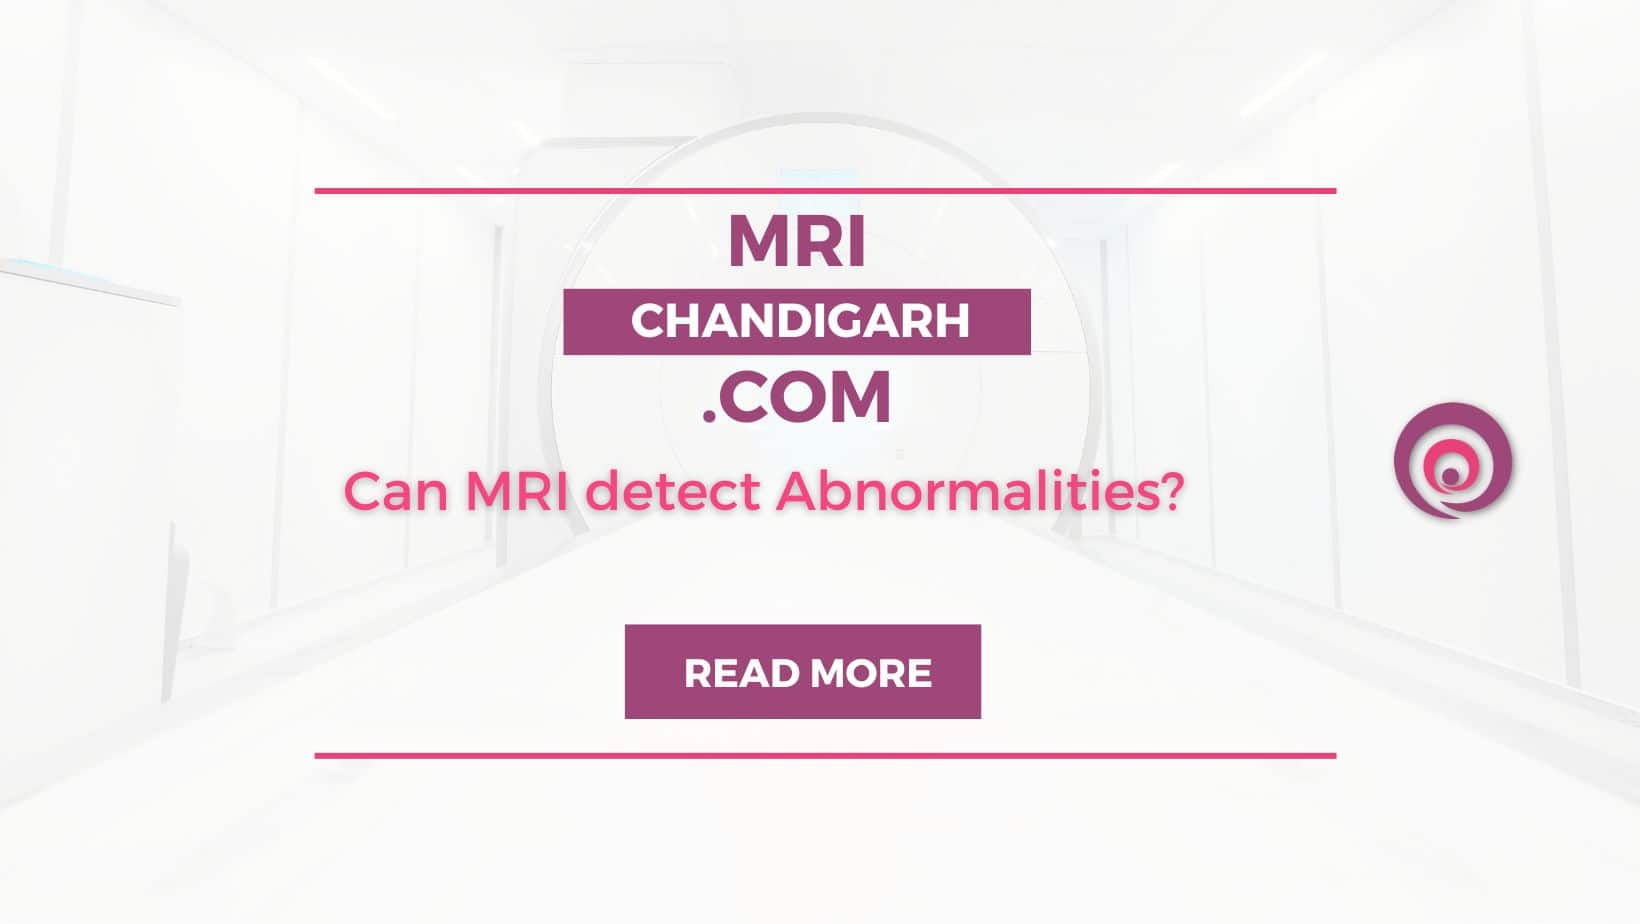 Can MRI detect Abnormalities?